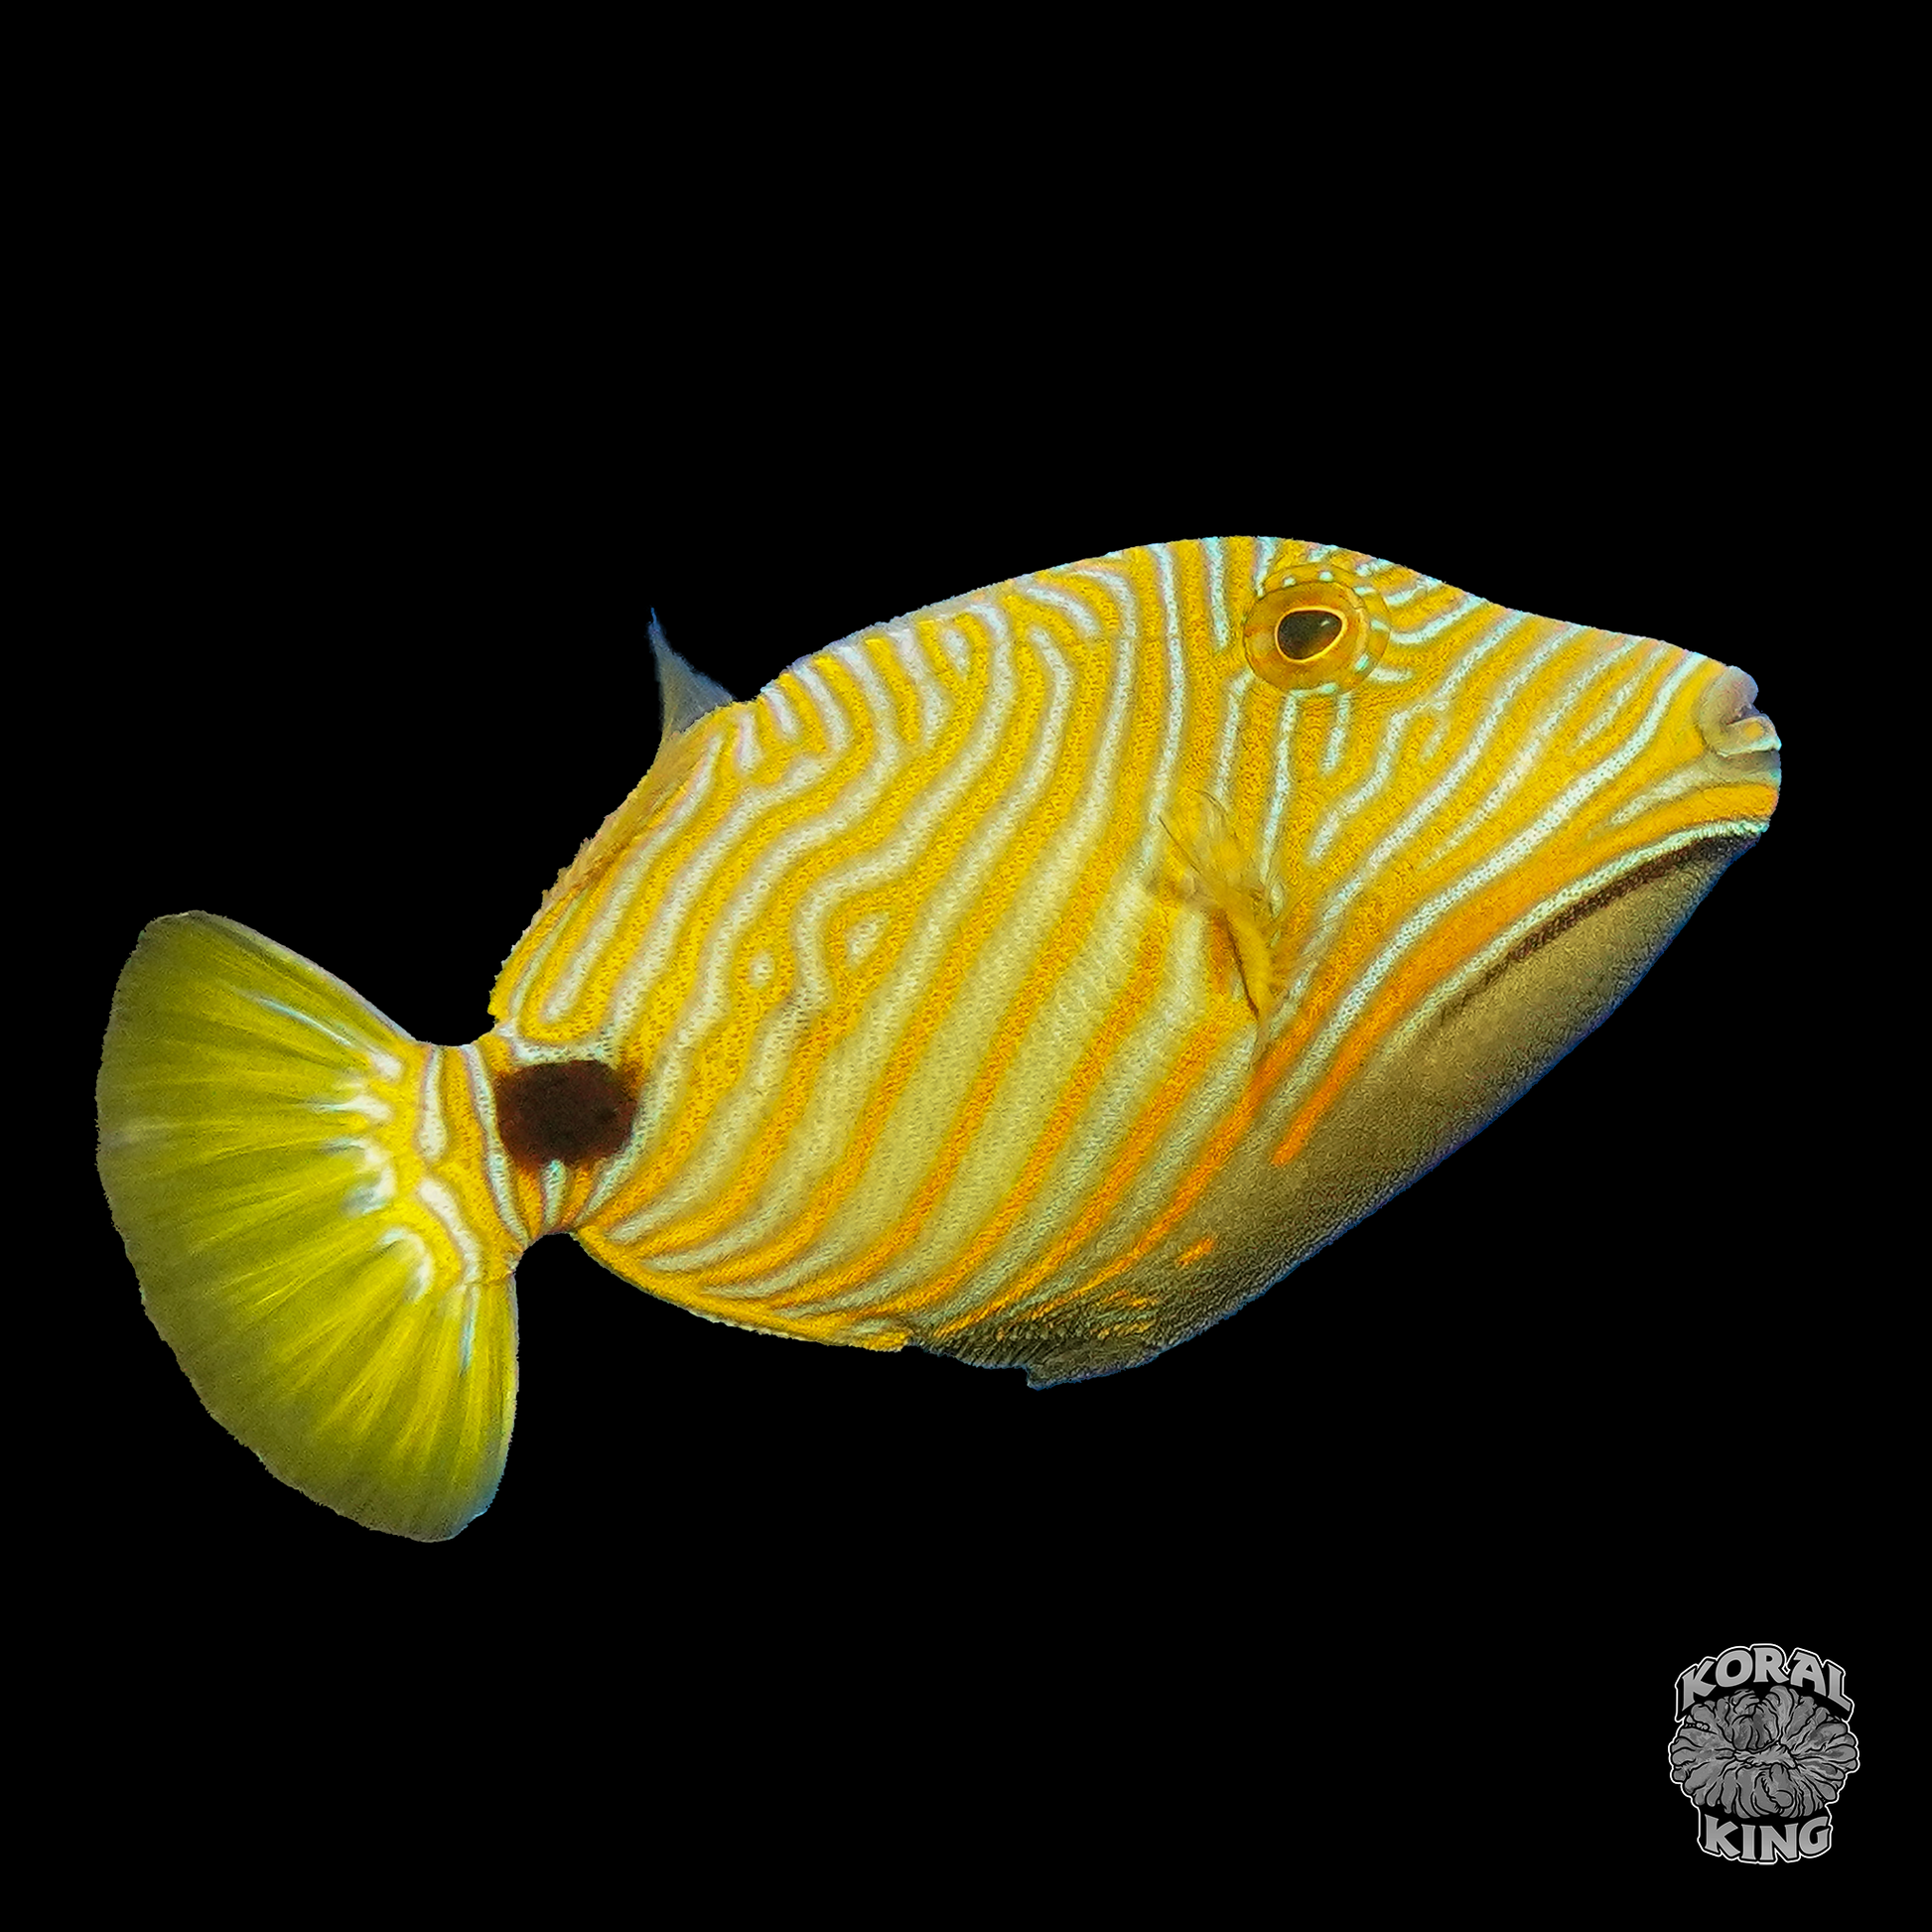 Undulate Triggerfish - Koral King